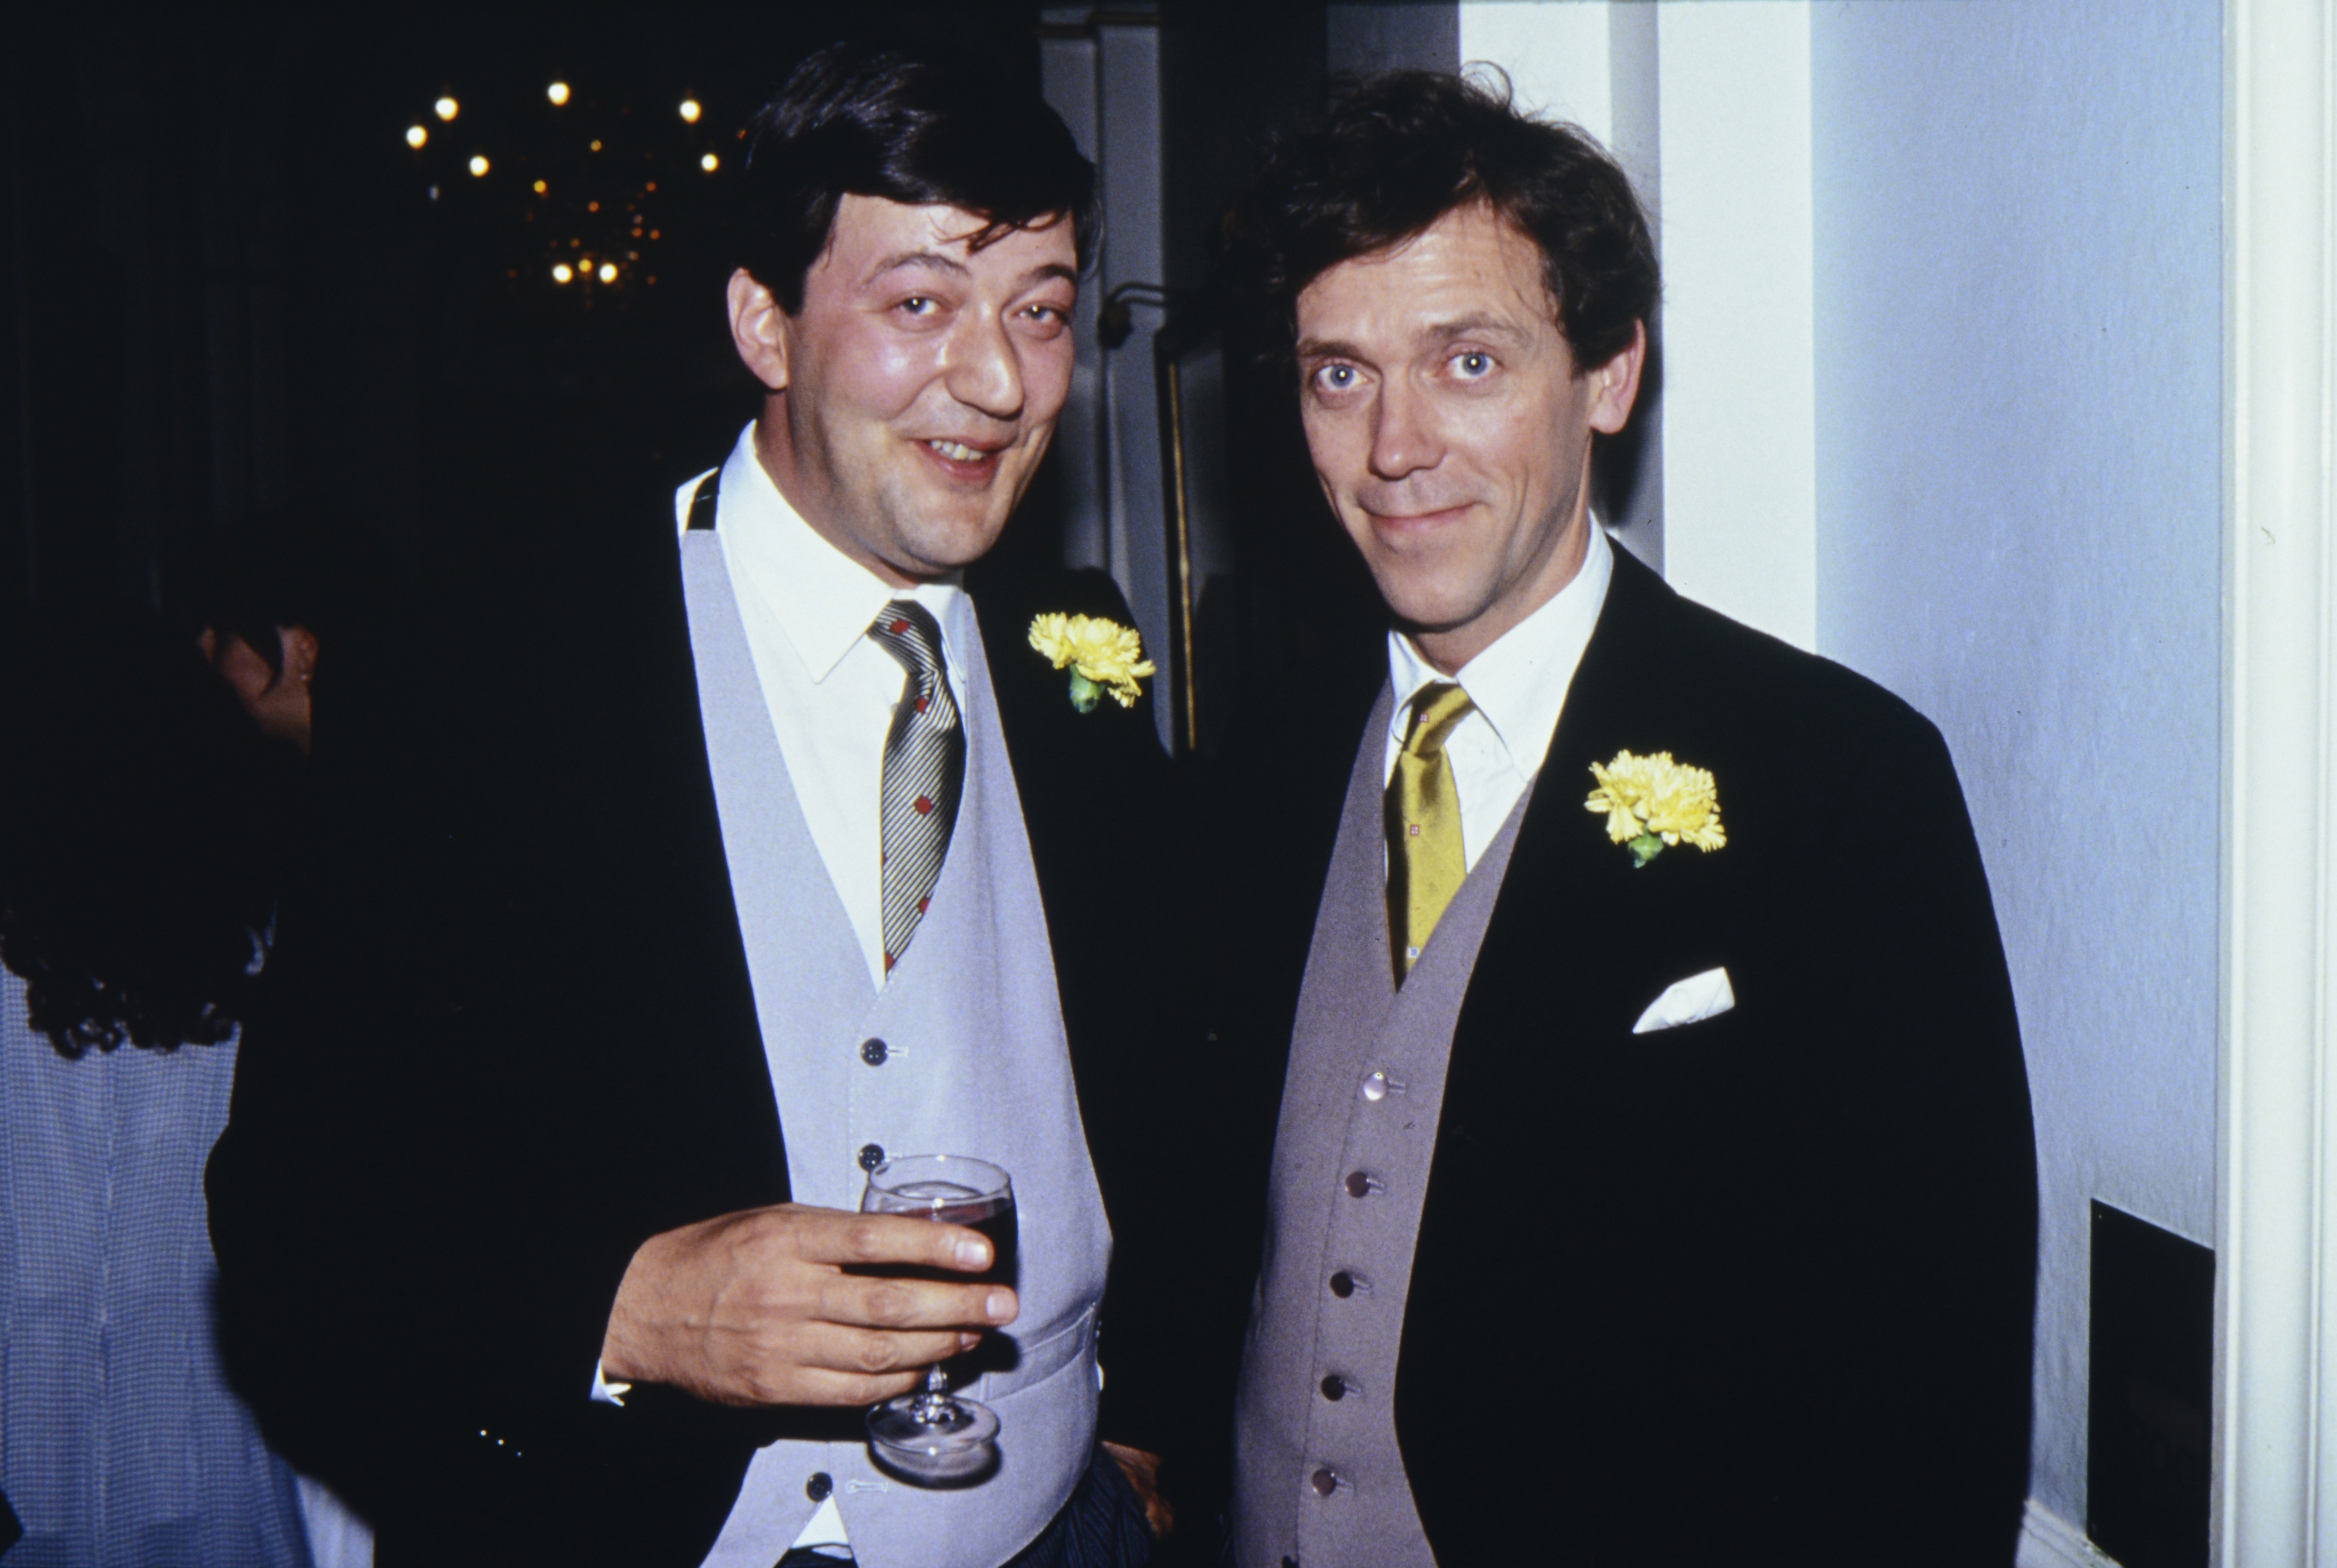 Stephen Fry und Hugh Laurie besuchen die britische Premiere von "Four Weddings and A Funeral" am 11. Mai 1994 am Leicester Square in London, England. | Quelle: Getty Images